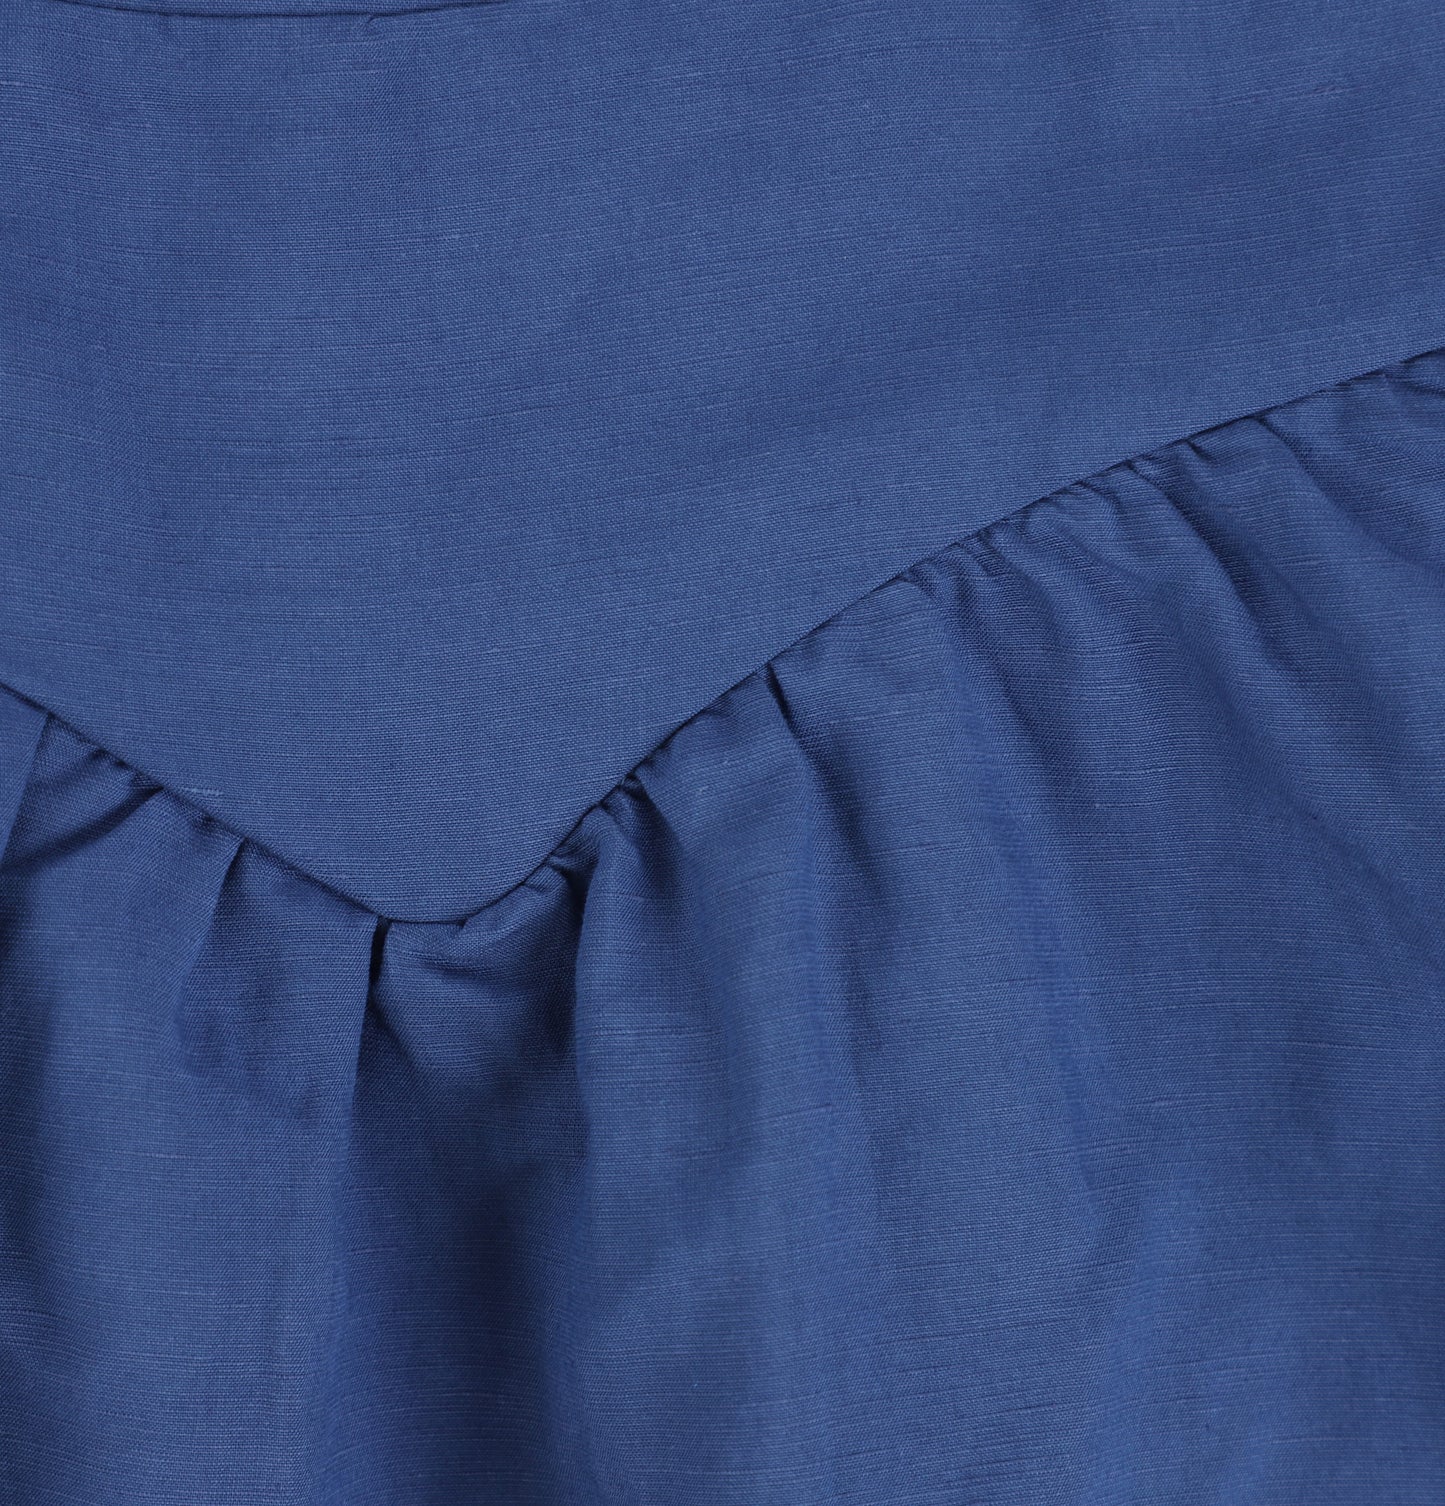 Miss L Ray Navy Skirt [Final Sale]